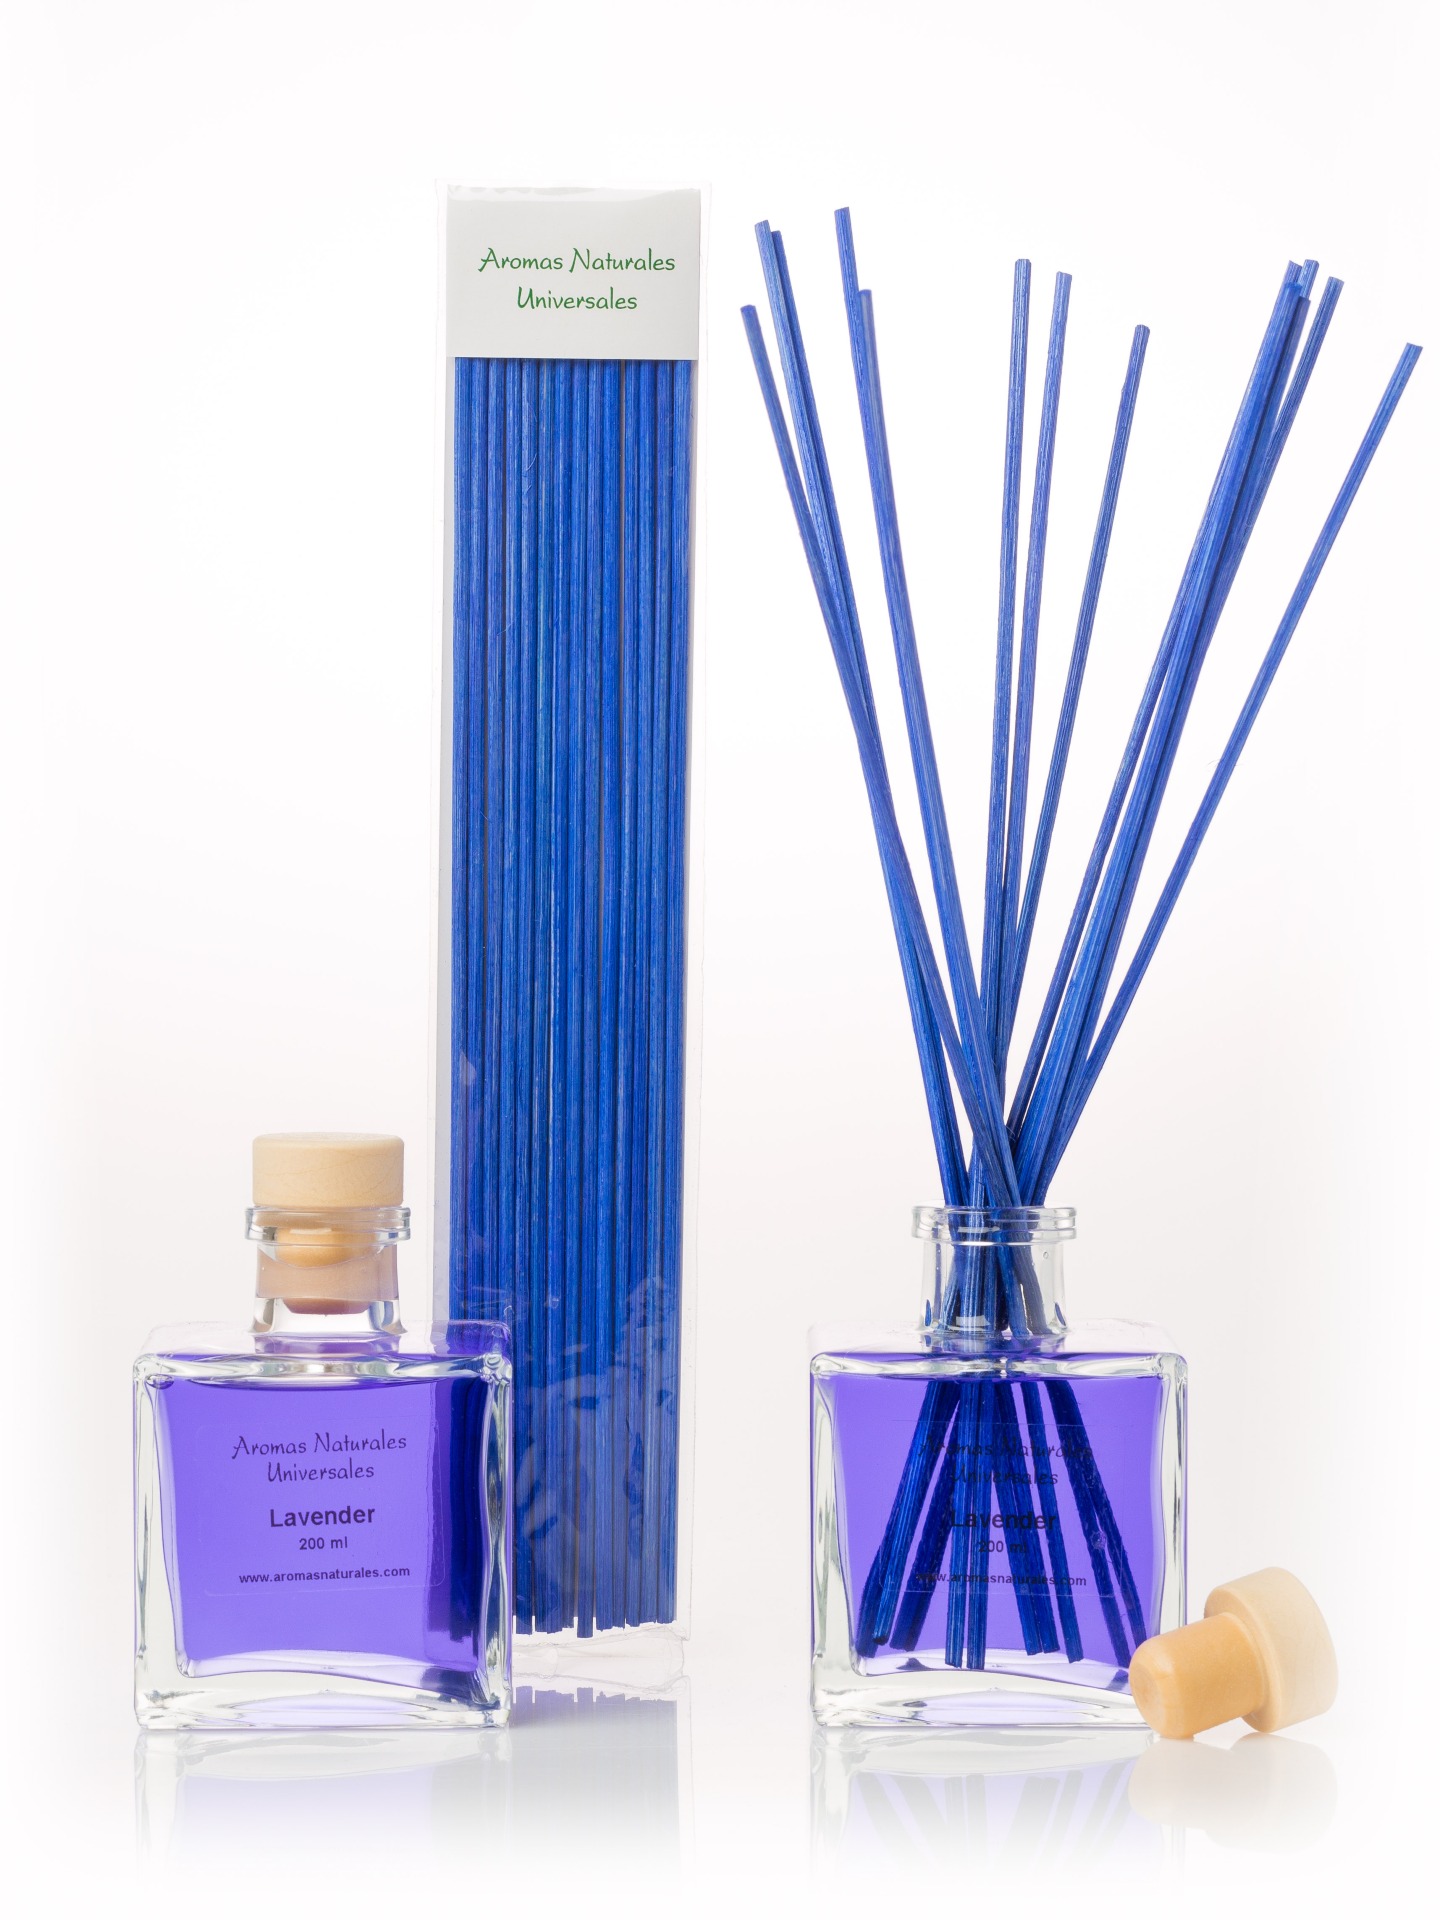 Aromas Naturales - MIKADO "Lavendel"